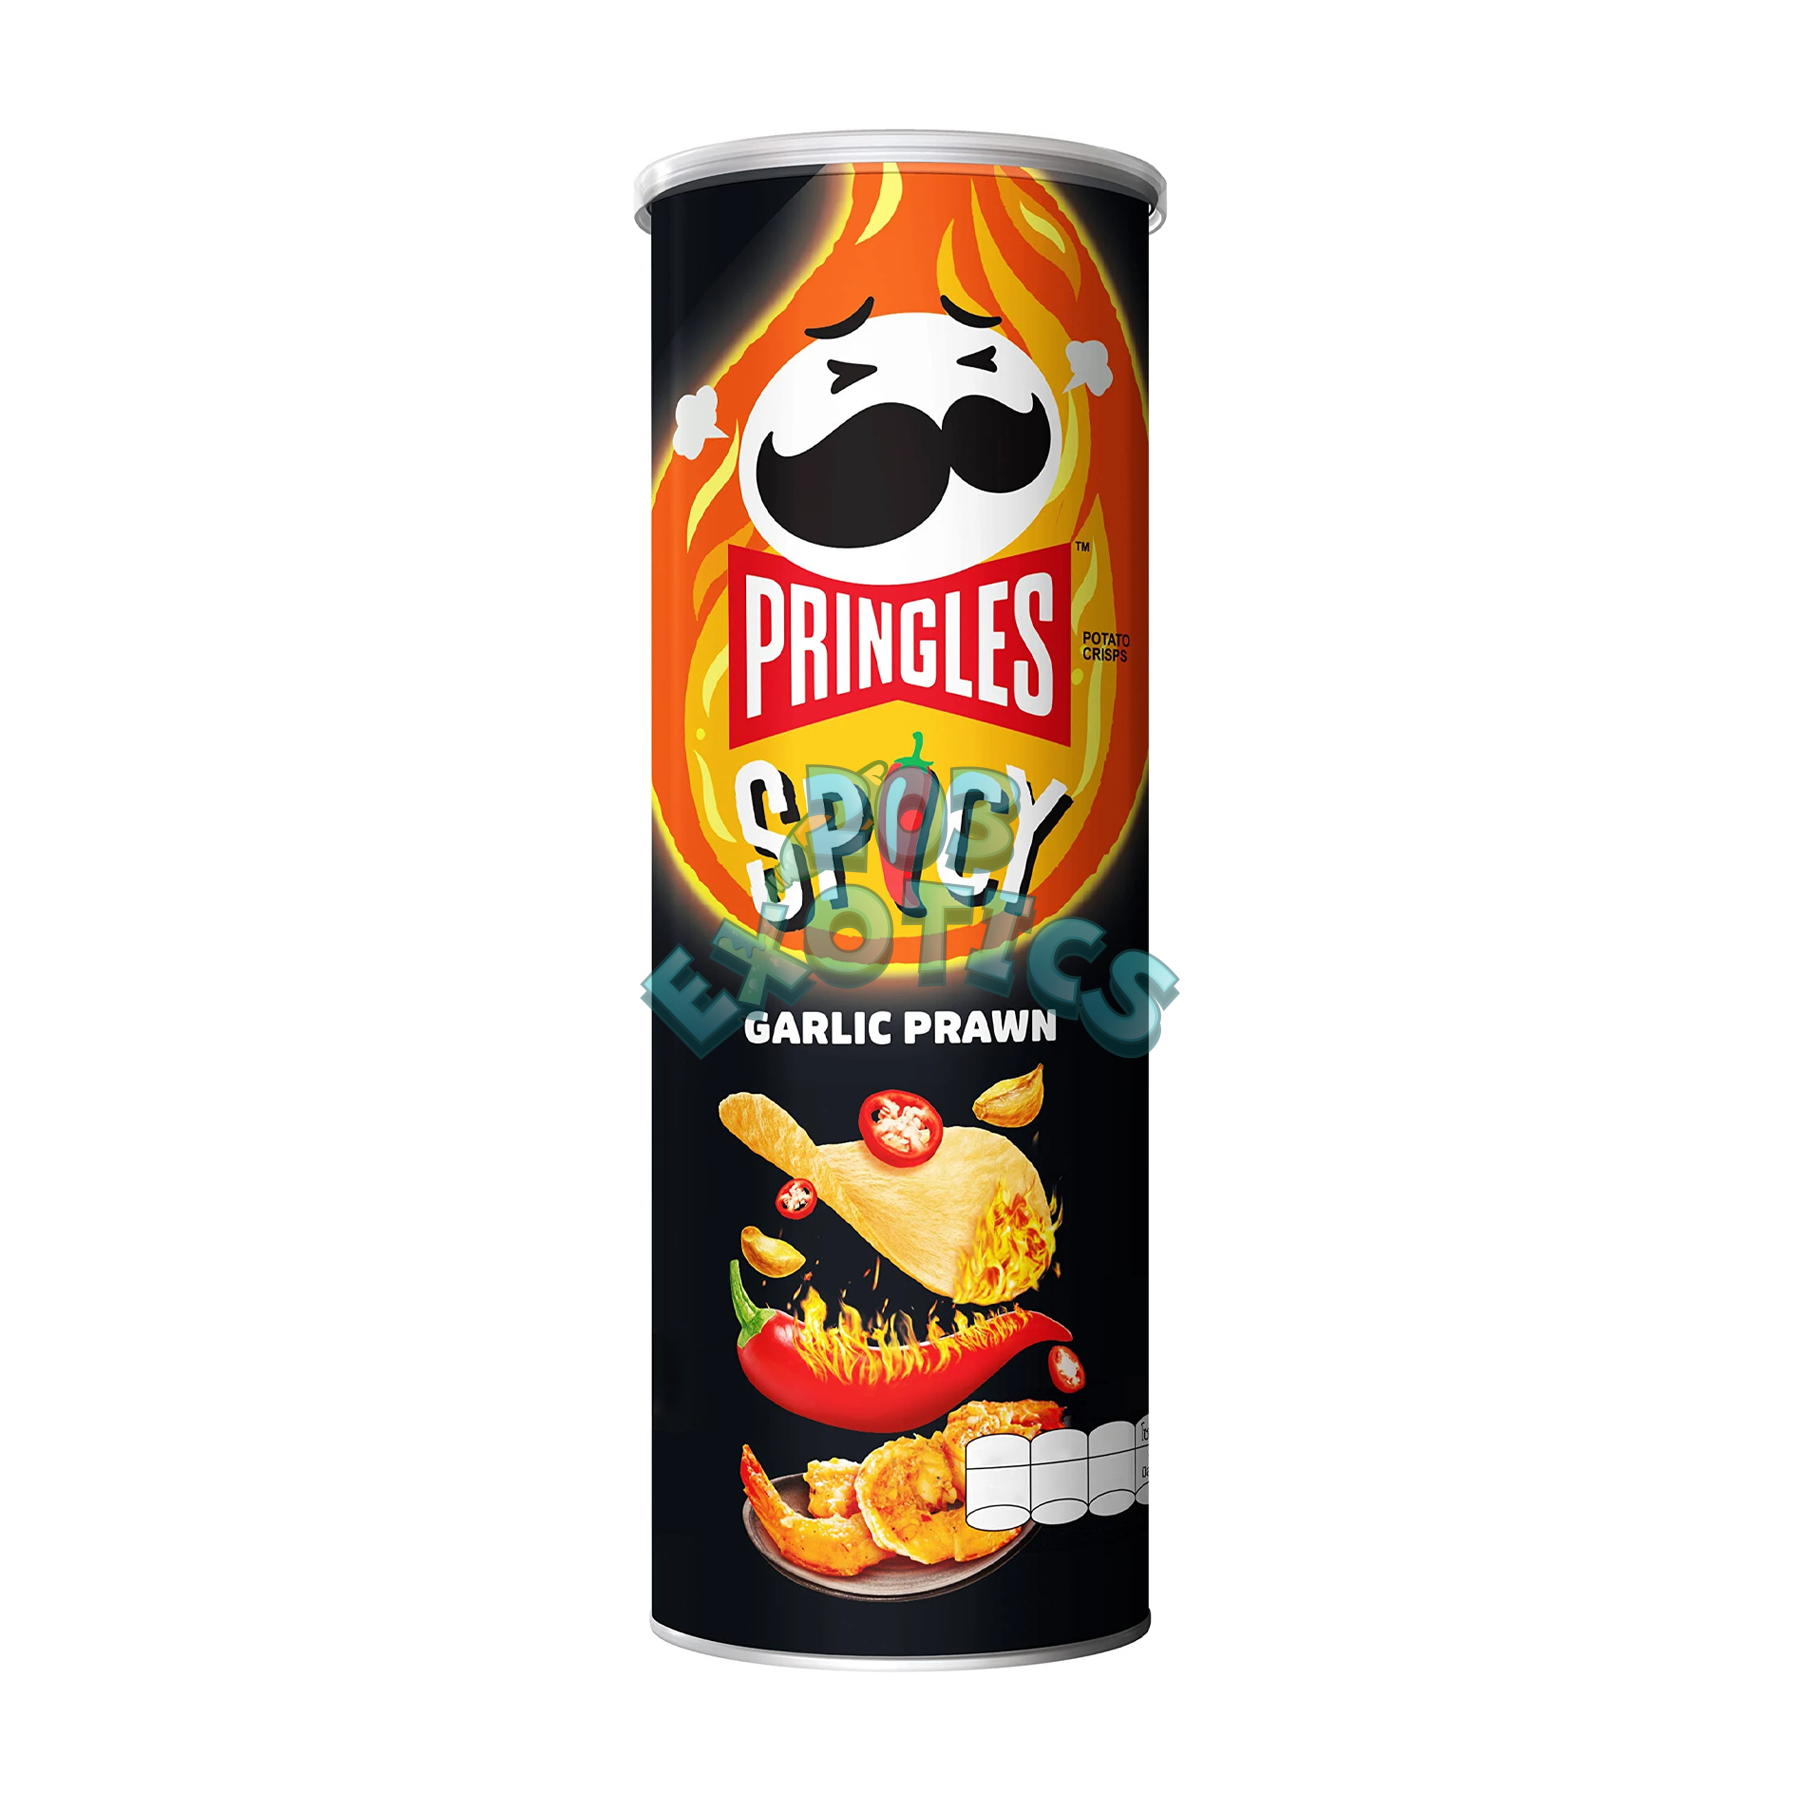 Pringles Super Hot Spicy Garlic Prawn Flavored Chips (155G)